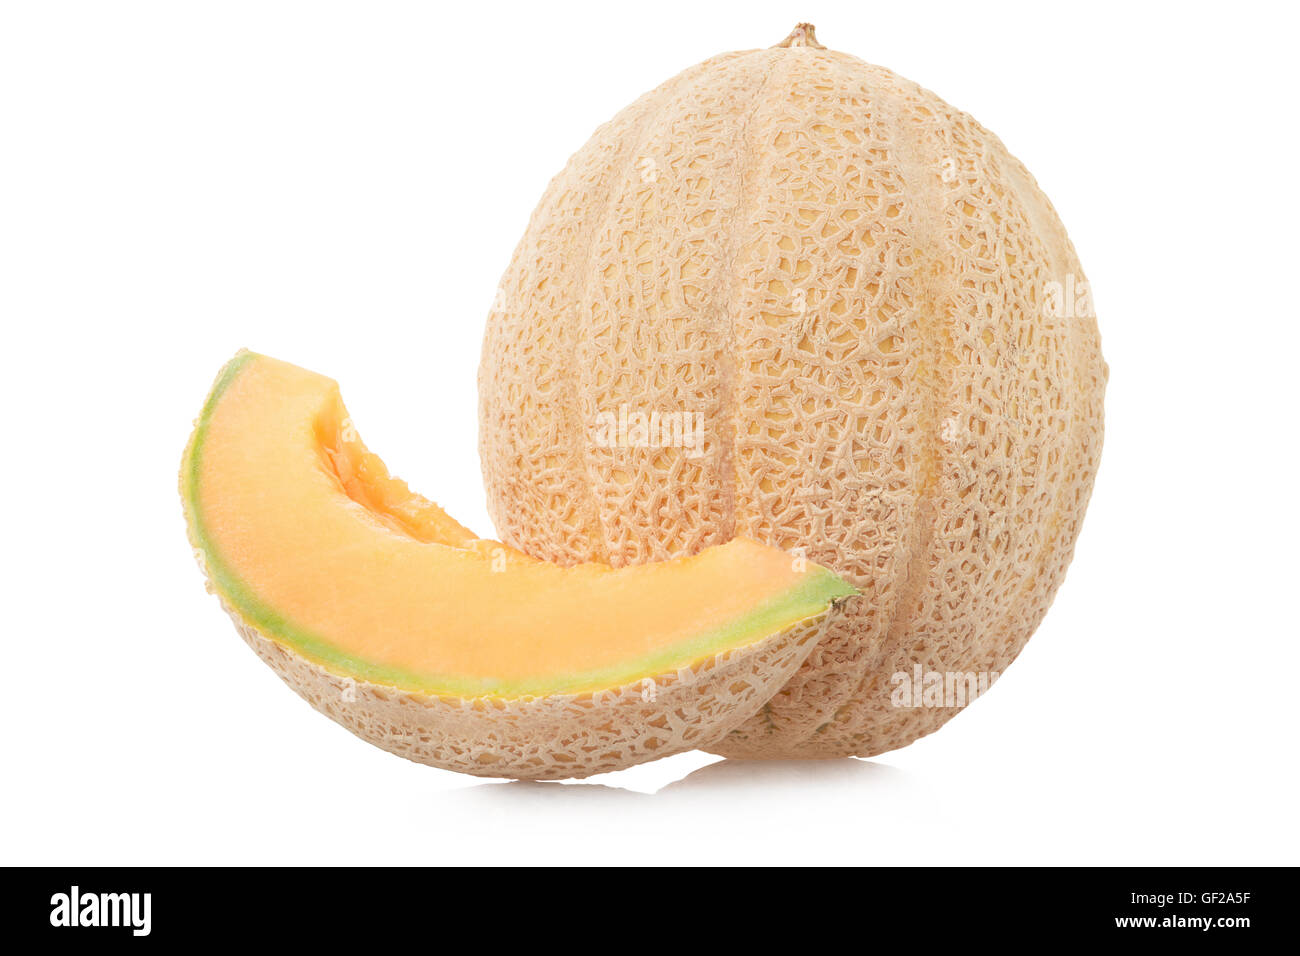 Cantaloupe melon with slice on white Stock Photo